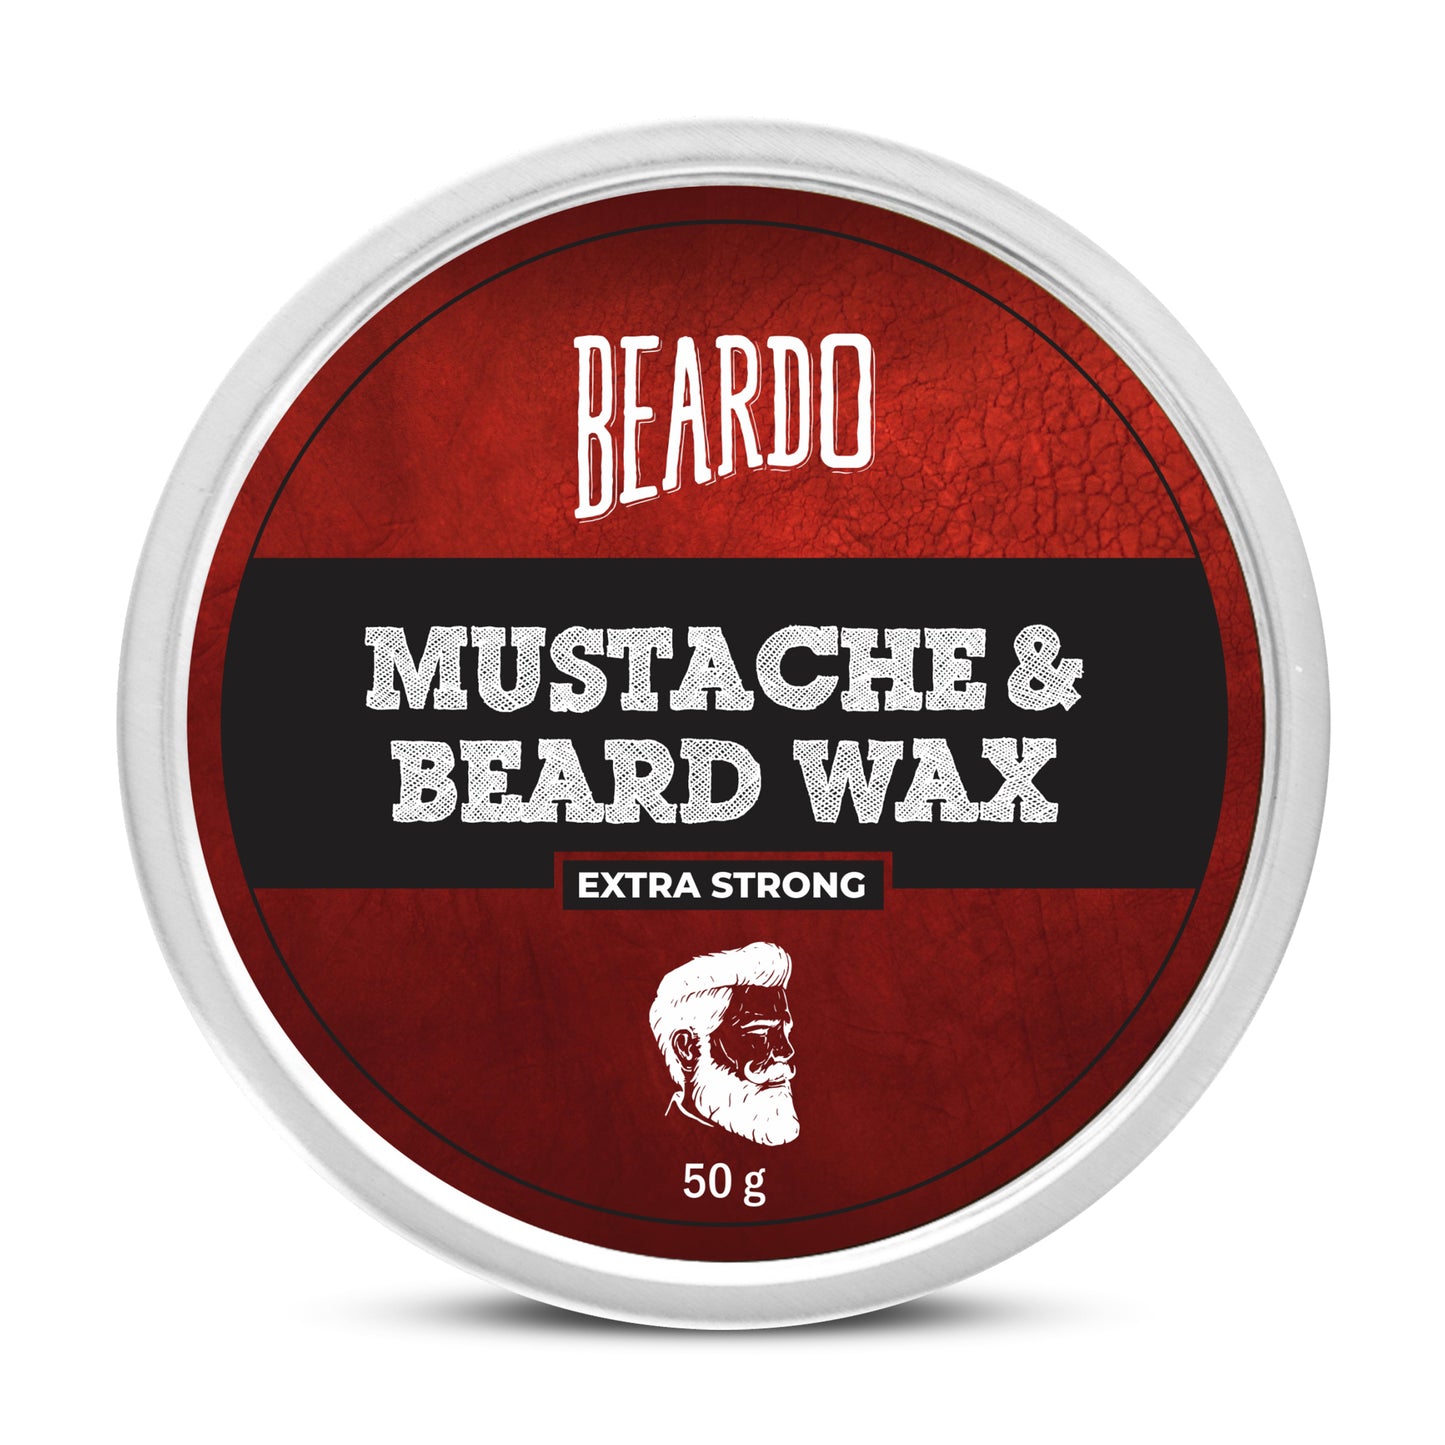 Beardo Beard & Mustache wax- Extra Strong,  beard wax, moustache wax, best mustache wax, best beard wax,  beard and mustache styles, beardo moustache wax